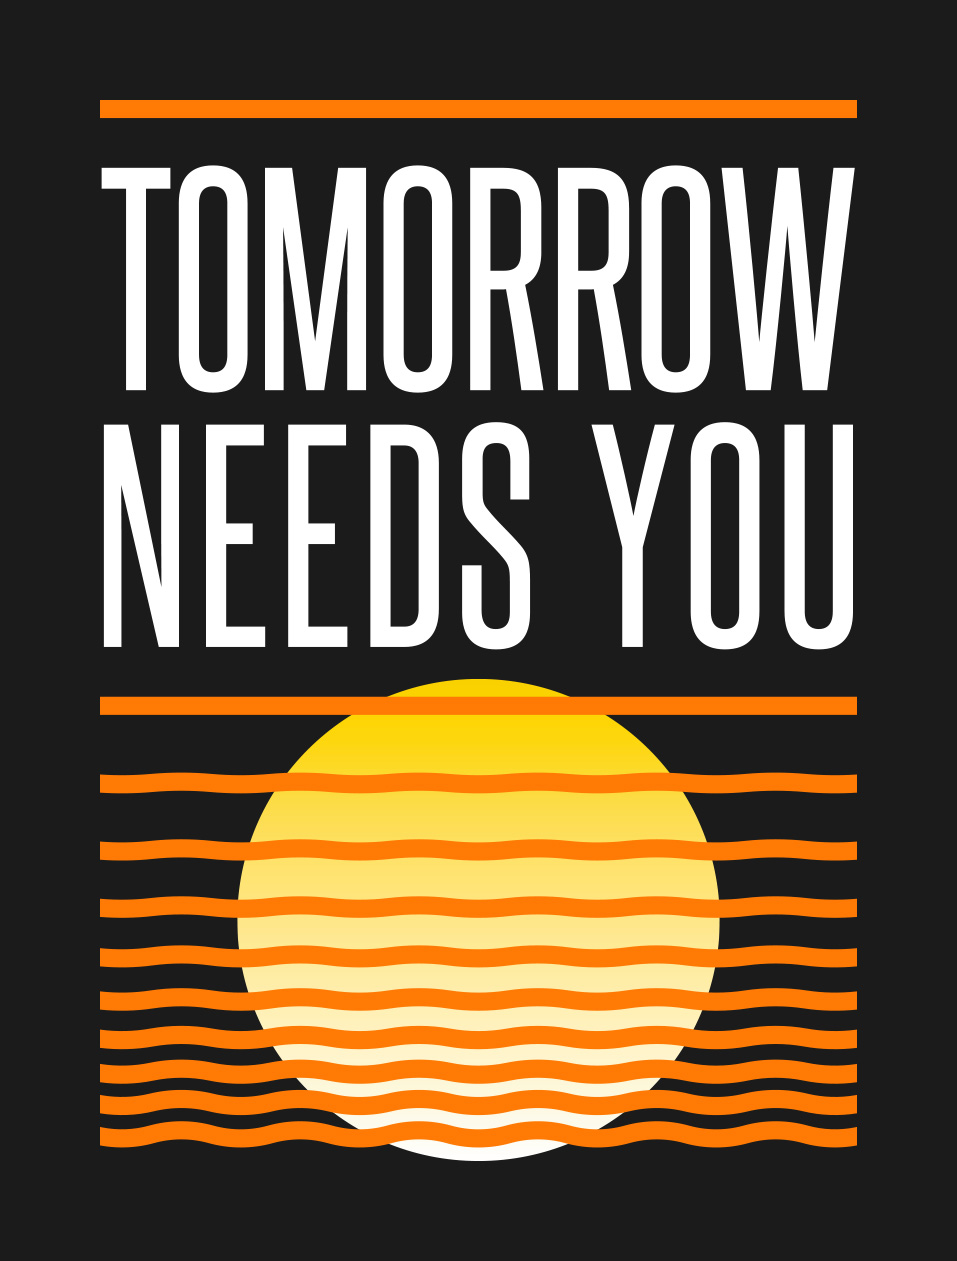 Tomorrow Needs You